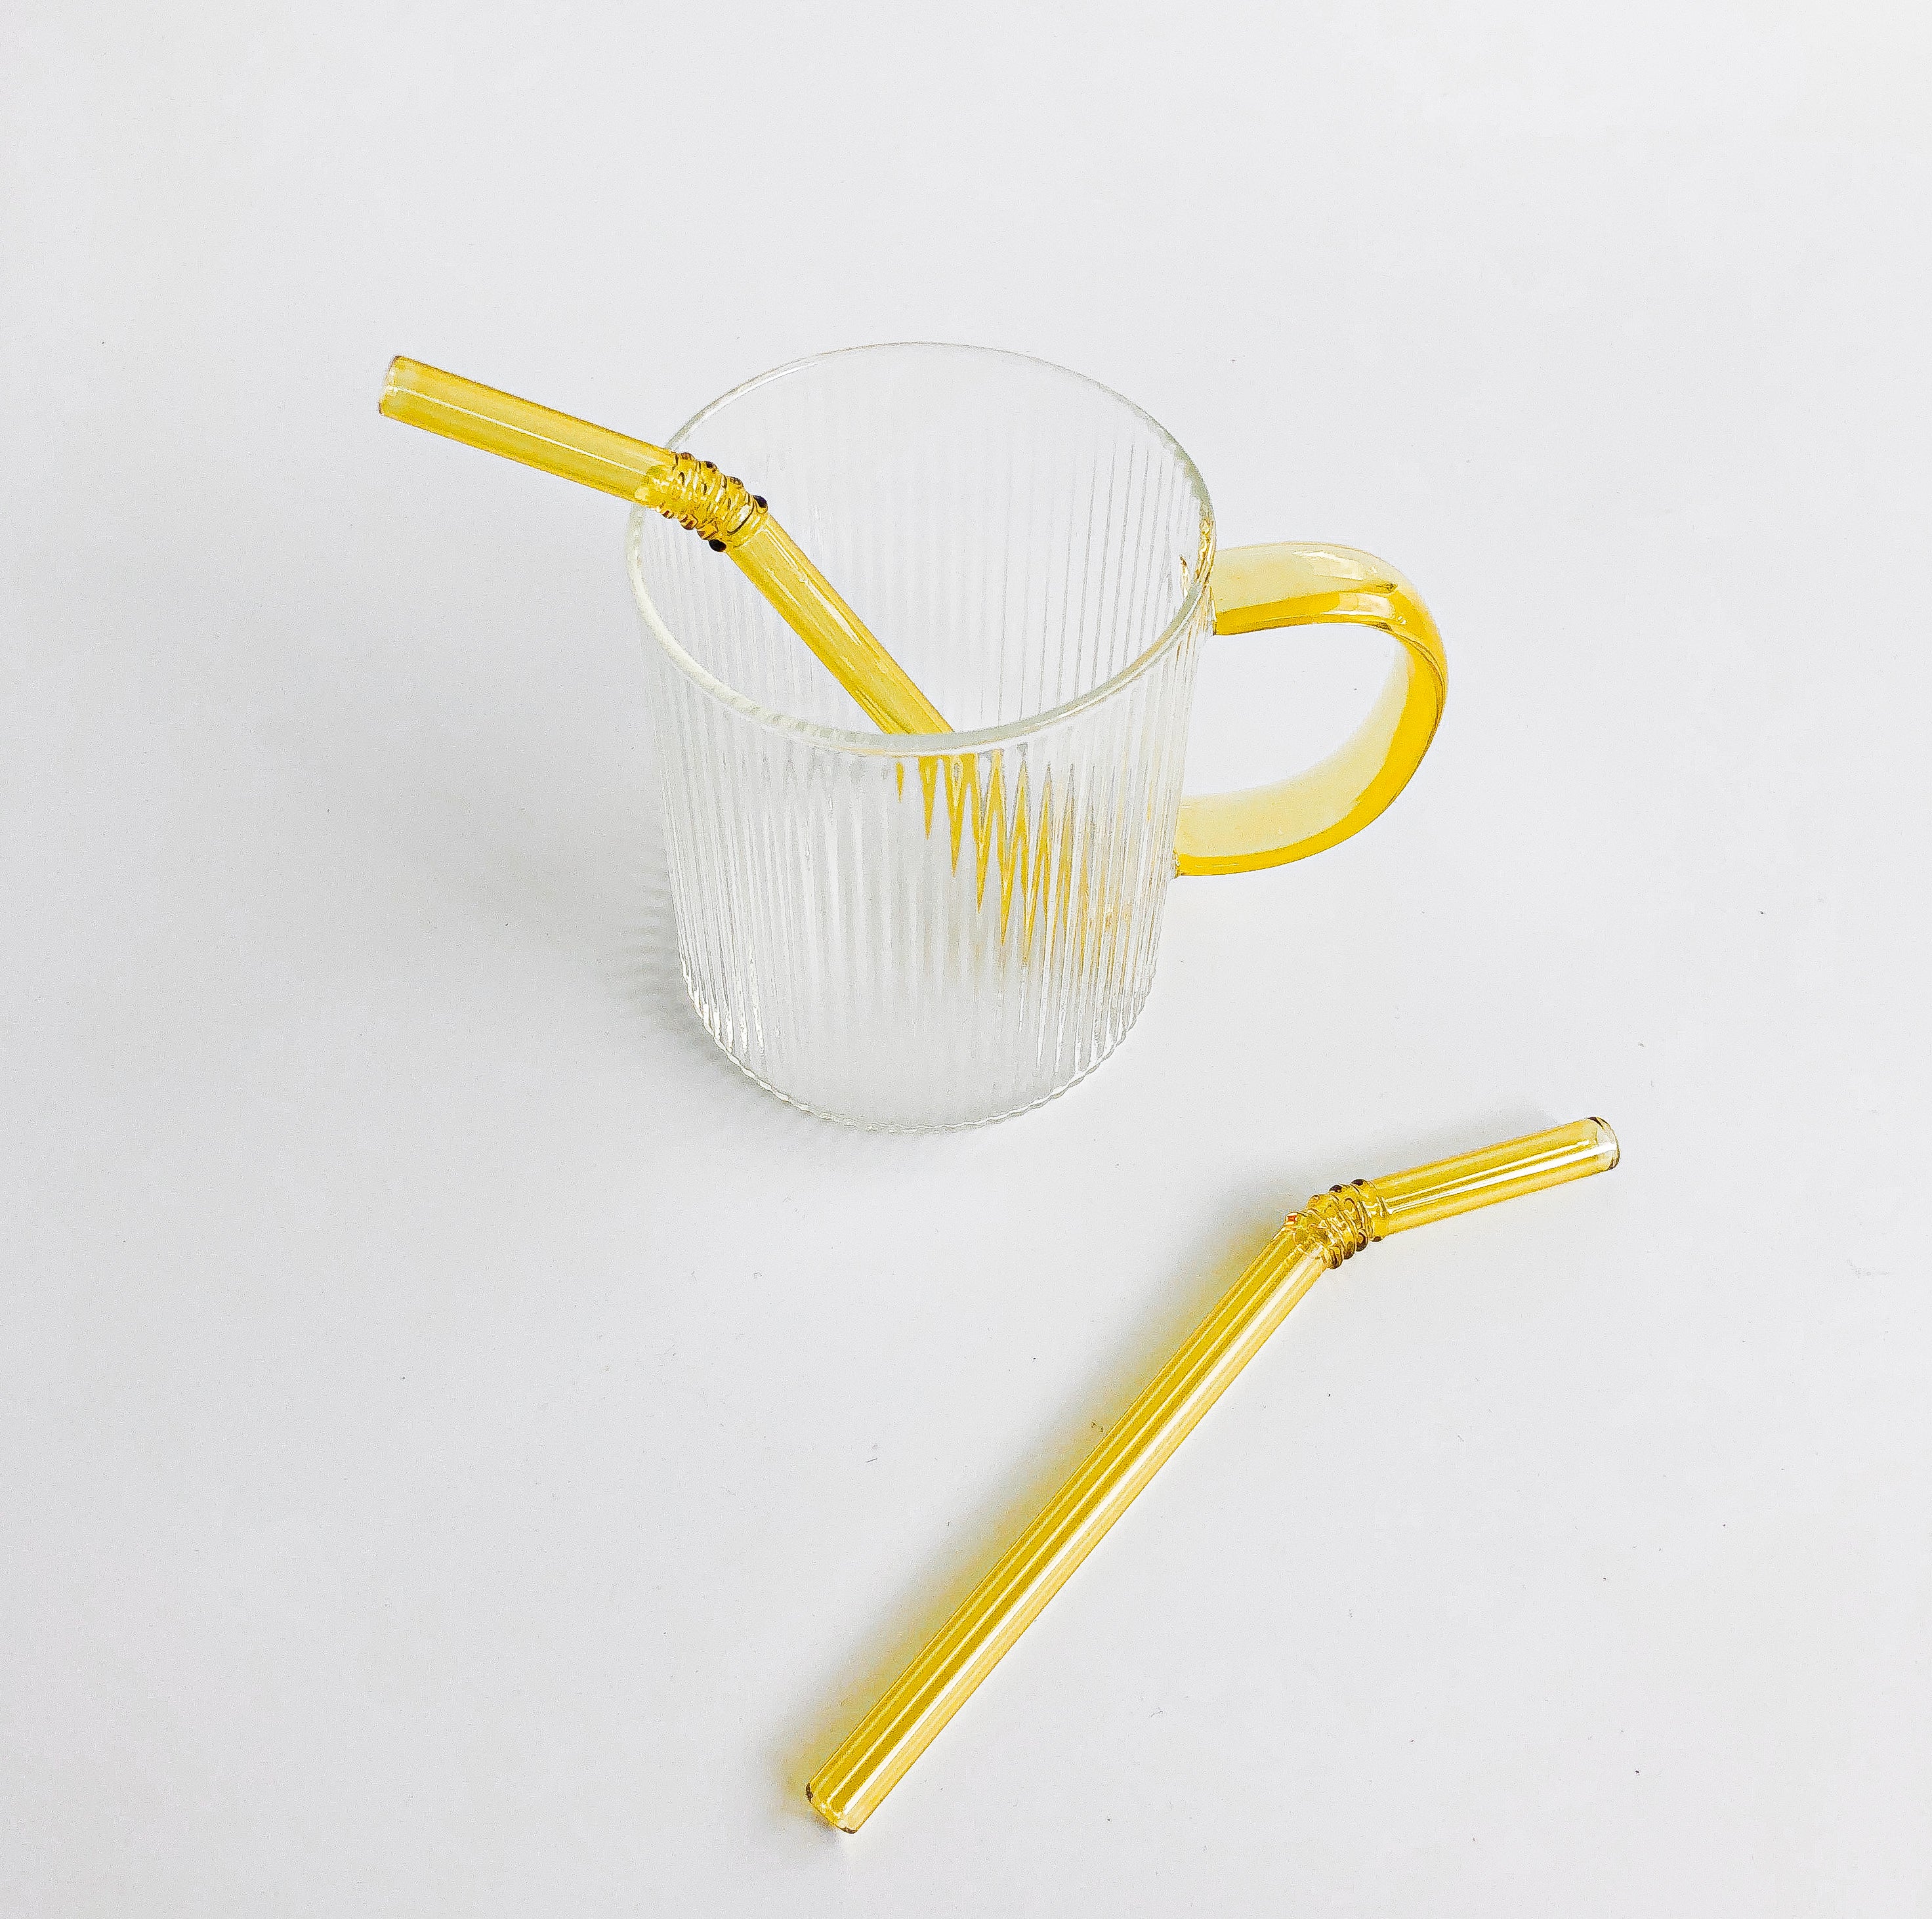 Ripple Mug Set by PROSE Tabletop